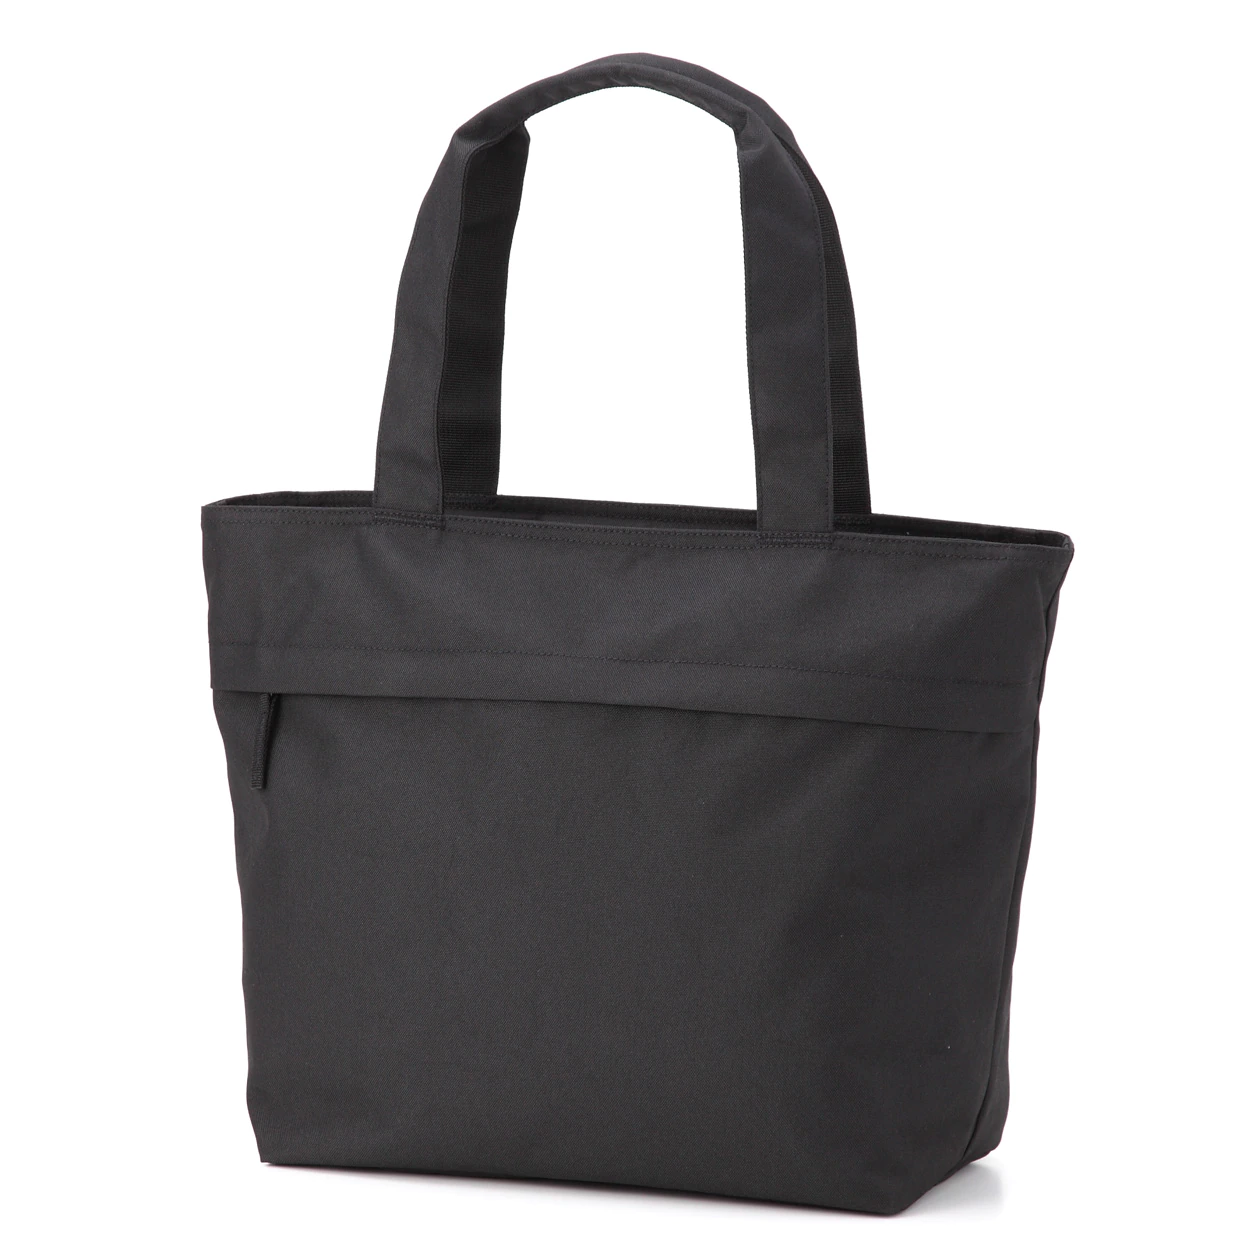 Black polyester tote bag